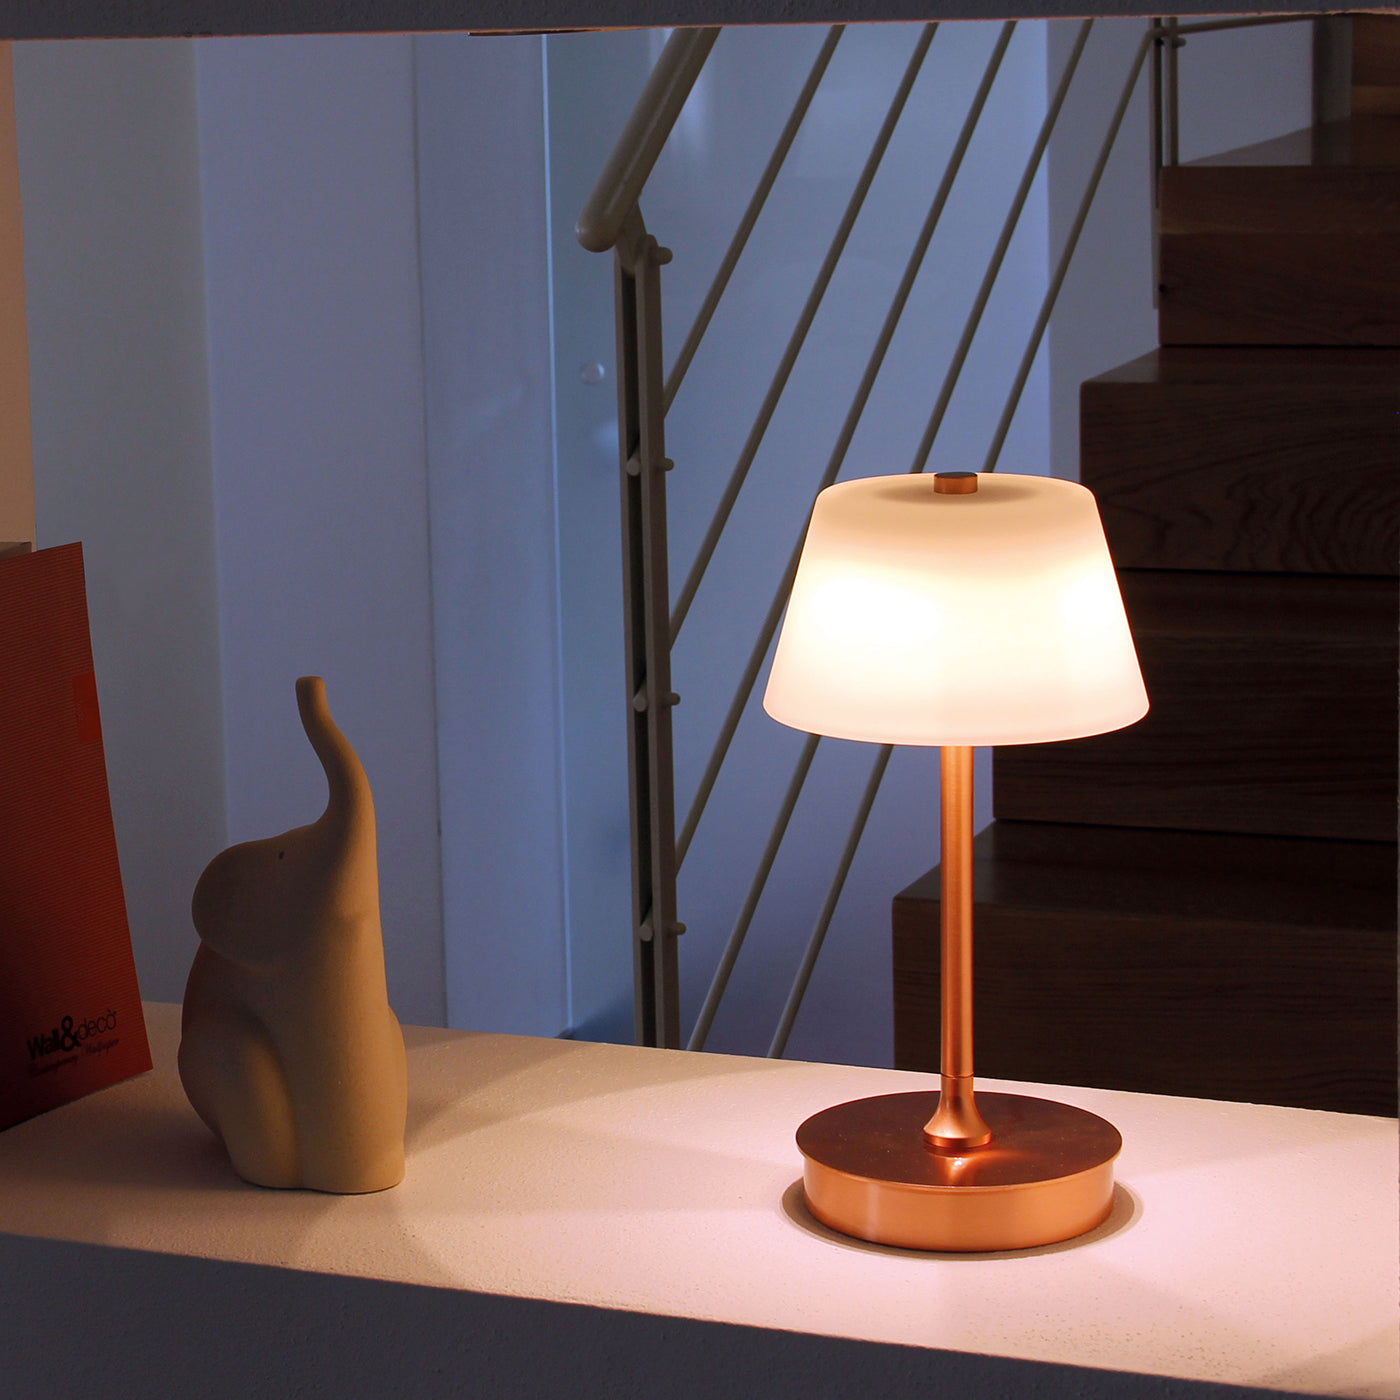 Lumetto Copper Table Lamp by Stefano Tabarin - Alternative view 1